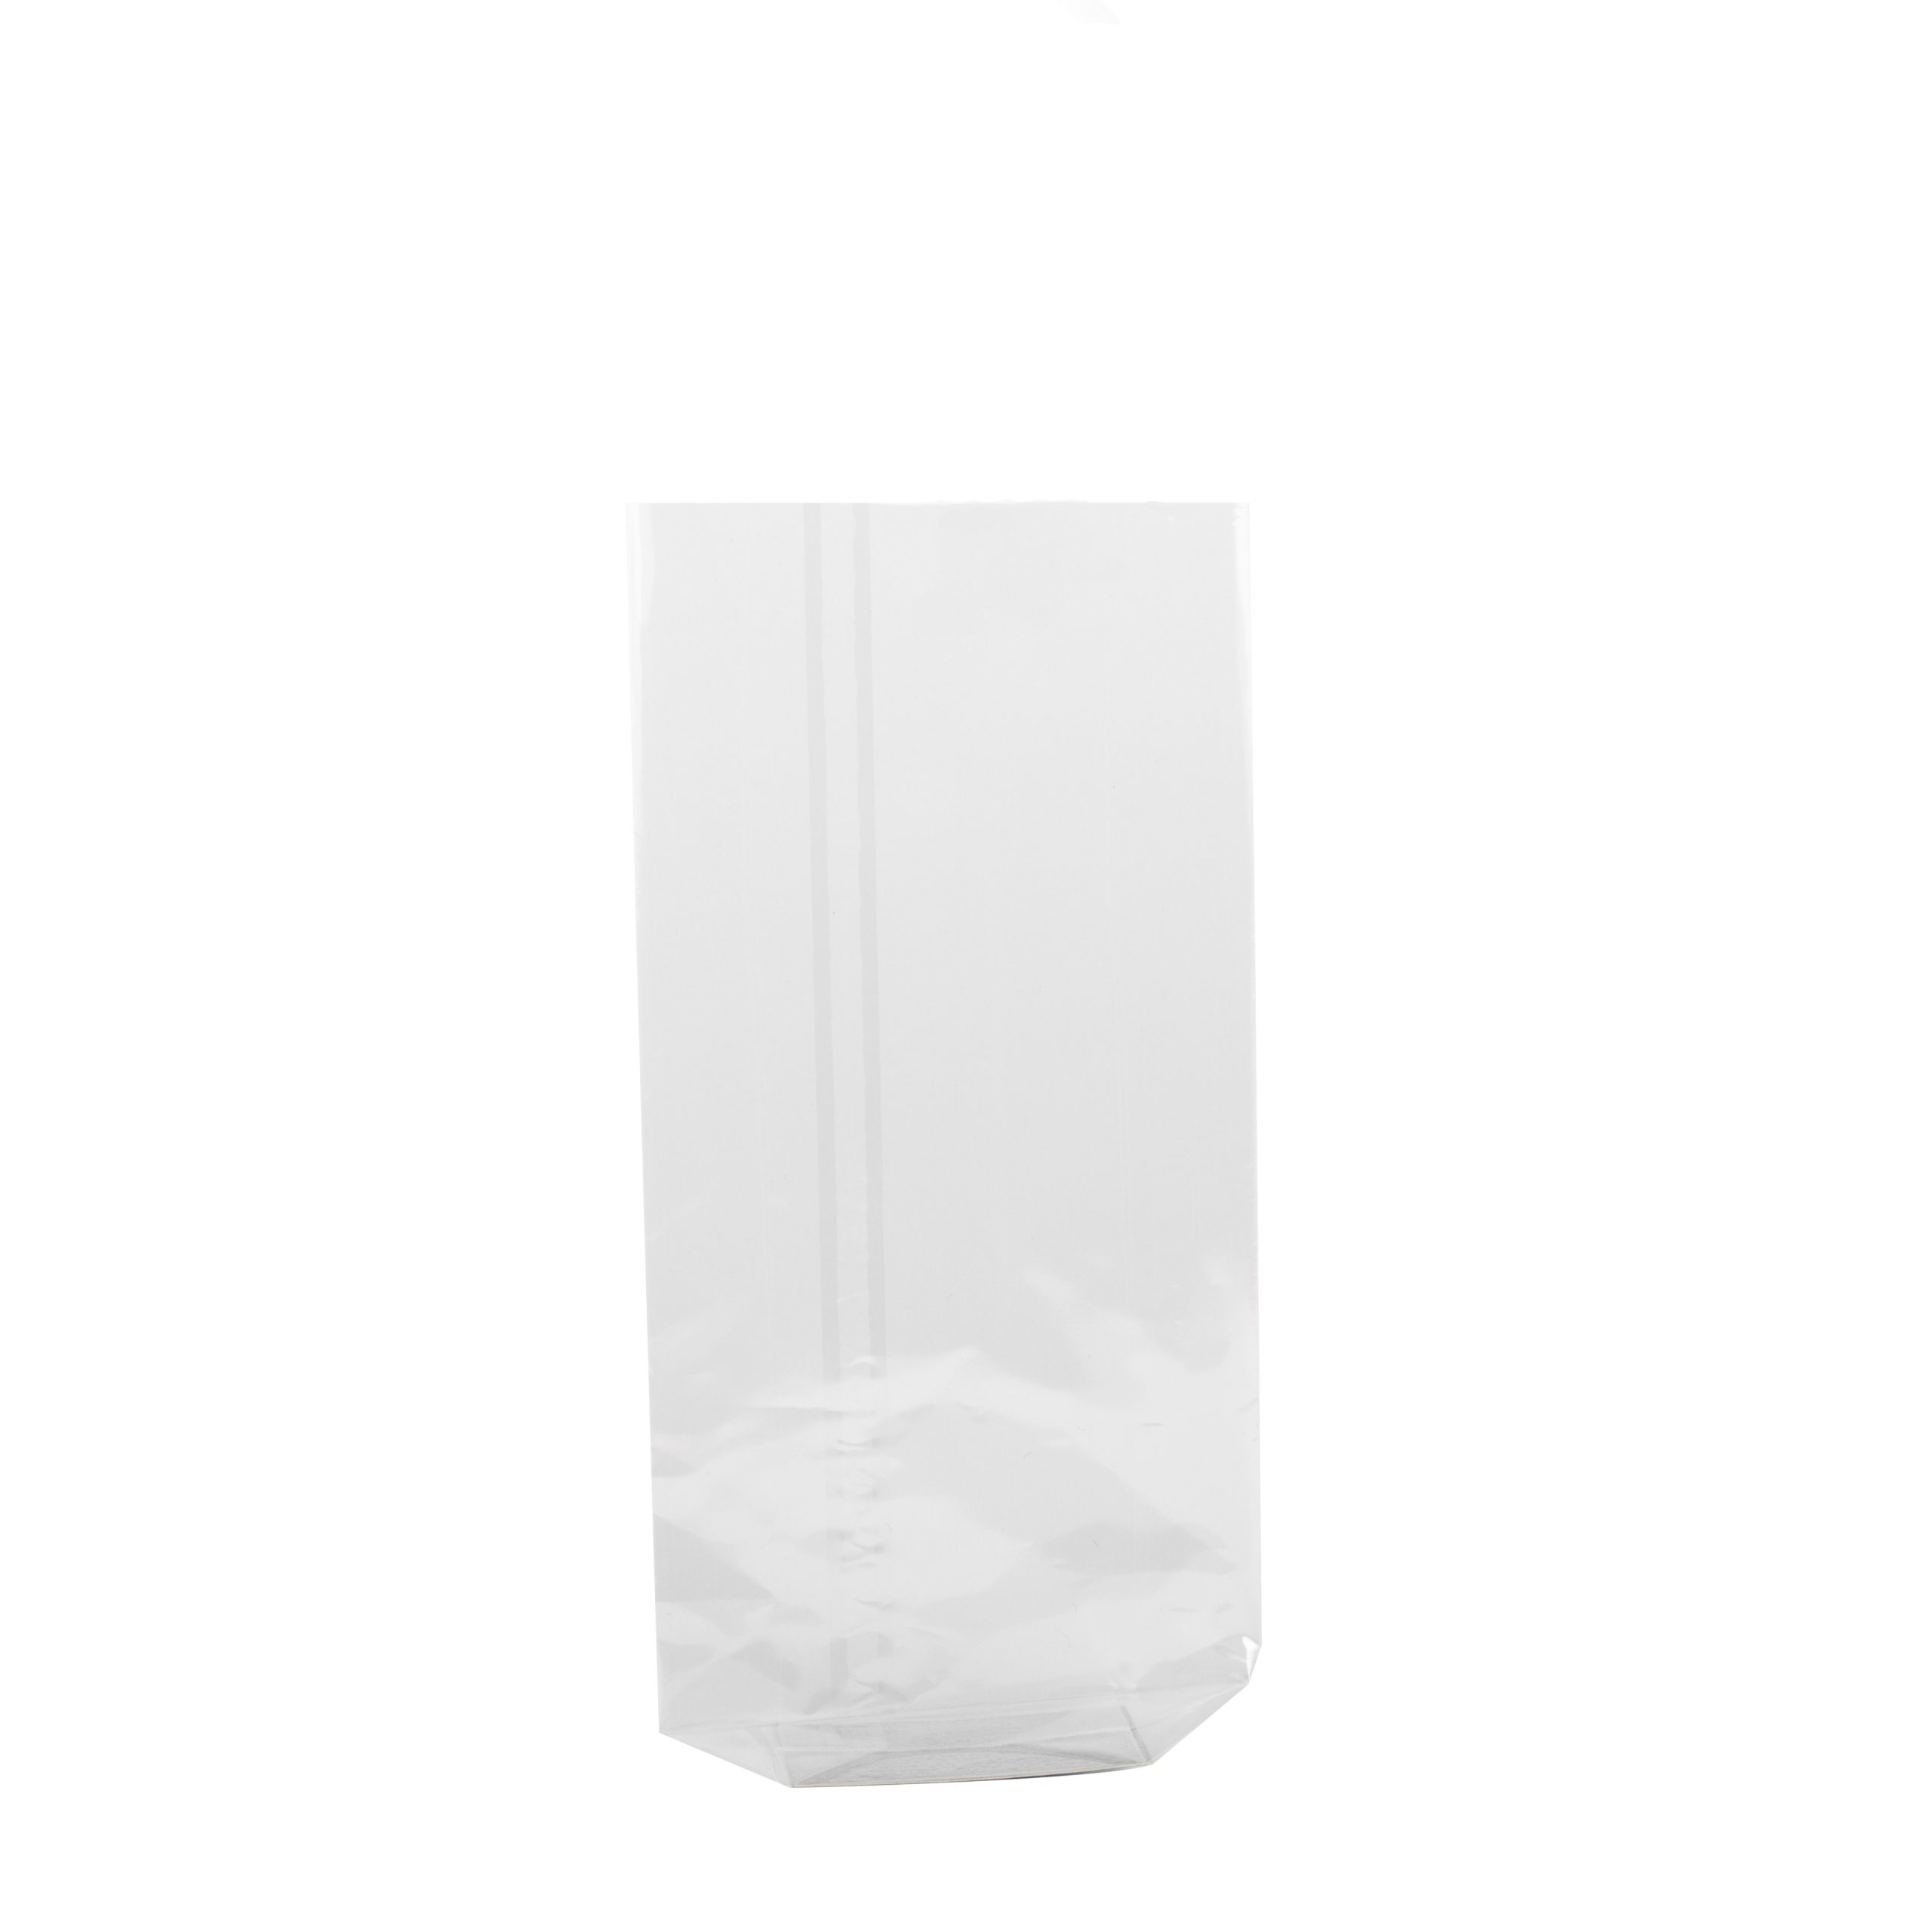 Cellophane Bag – 100 x 200mm